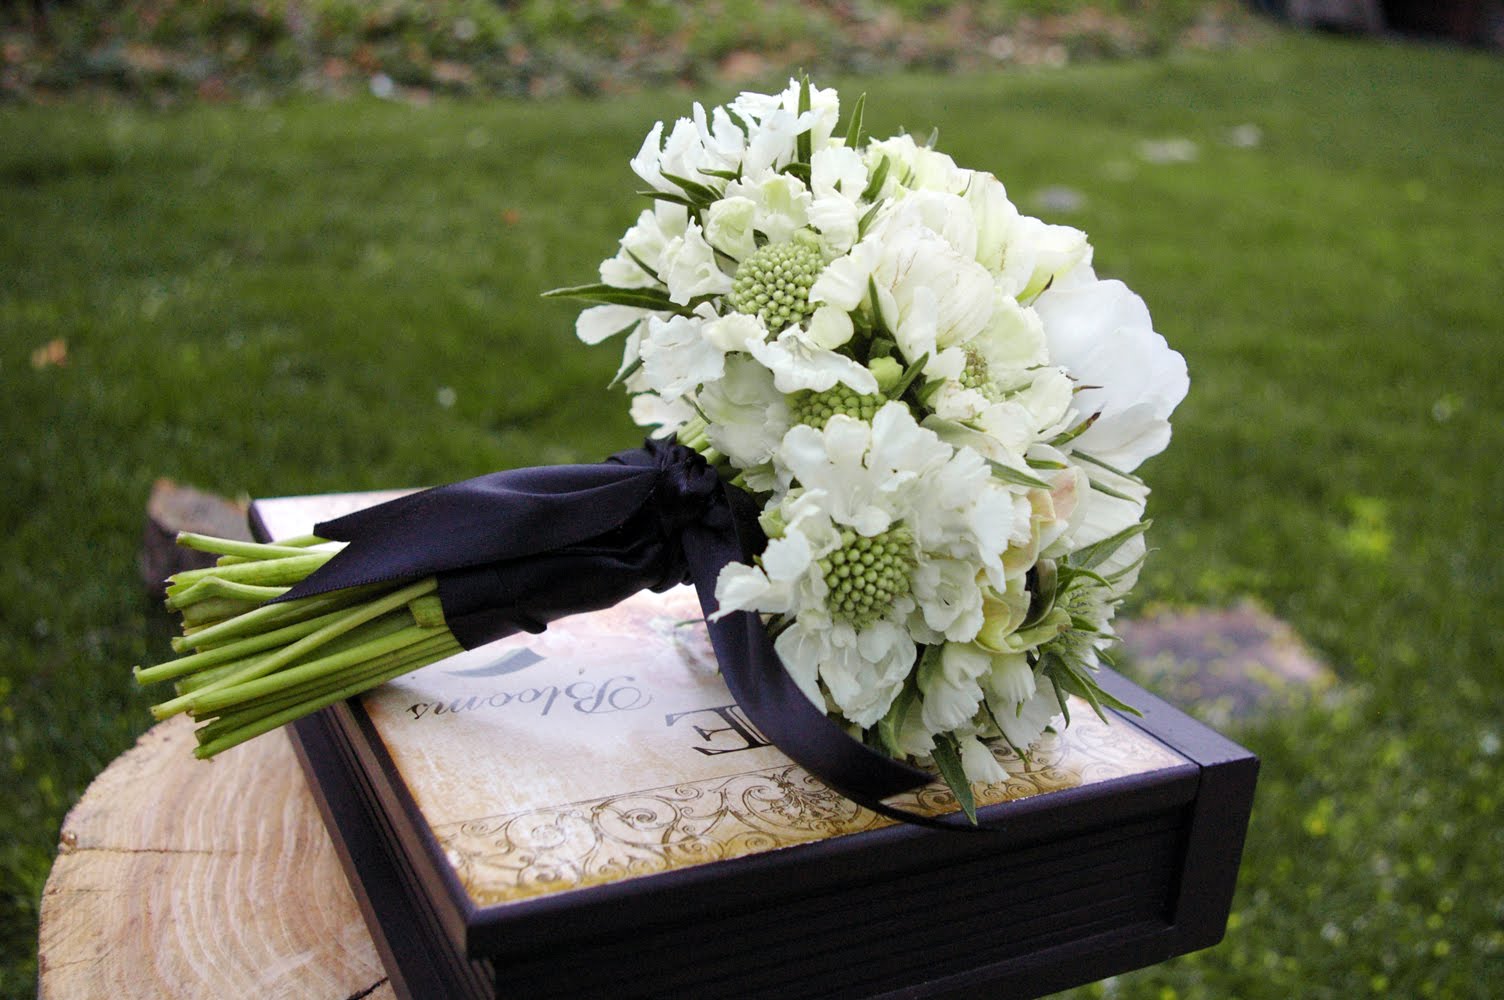 http://3.bp.blogspot.com/_jz5IpQCMTwo/S9ouM9mDp2I/AAAAAAAACrc/AqccU4g-4Ek/s1600/white+bridal+bouquet+utah+wedding+flowers+studio+stems+white+anemone+scabiosa+white+green+black+bouquet.jpg